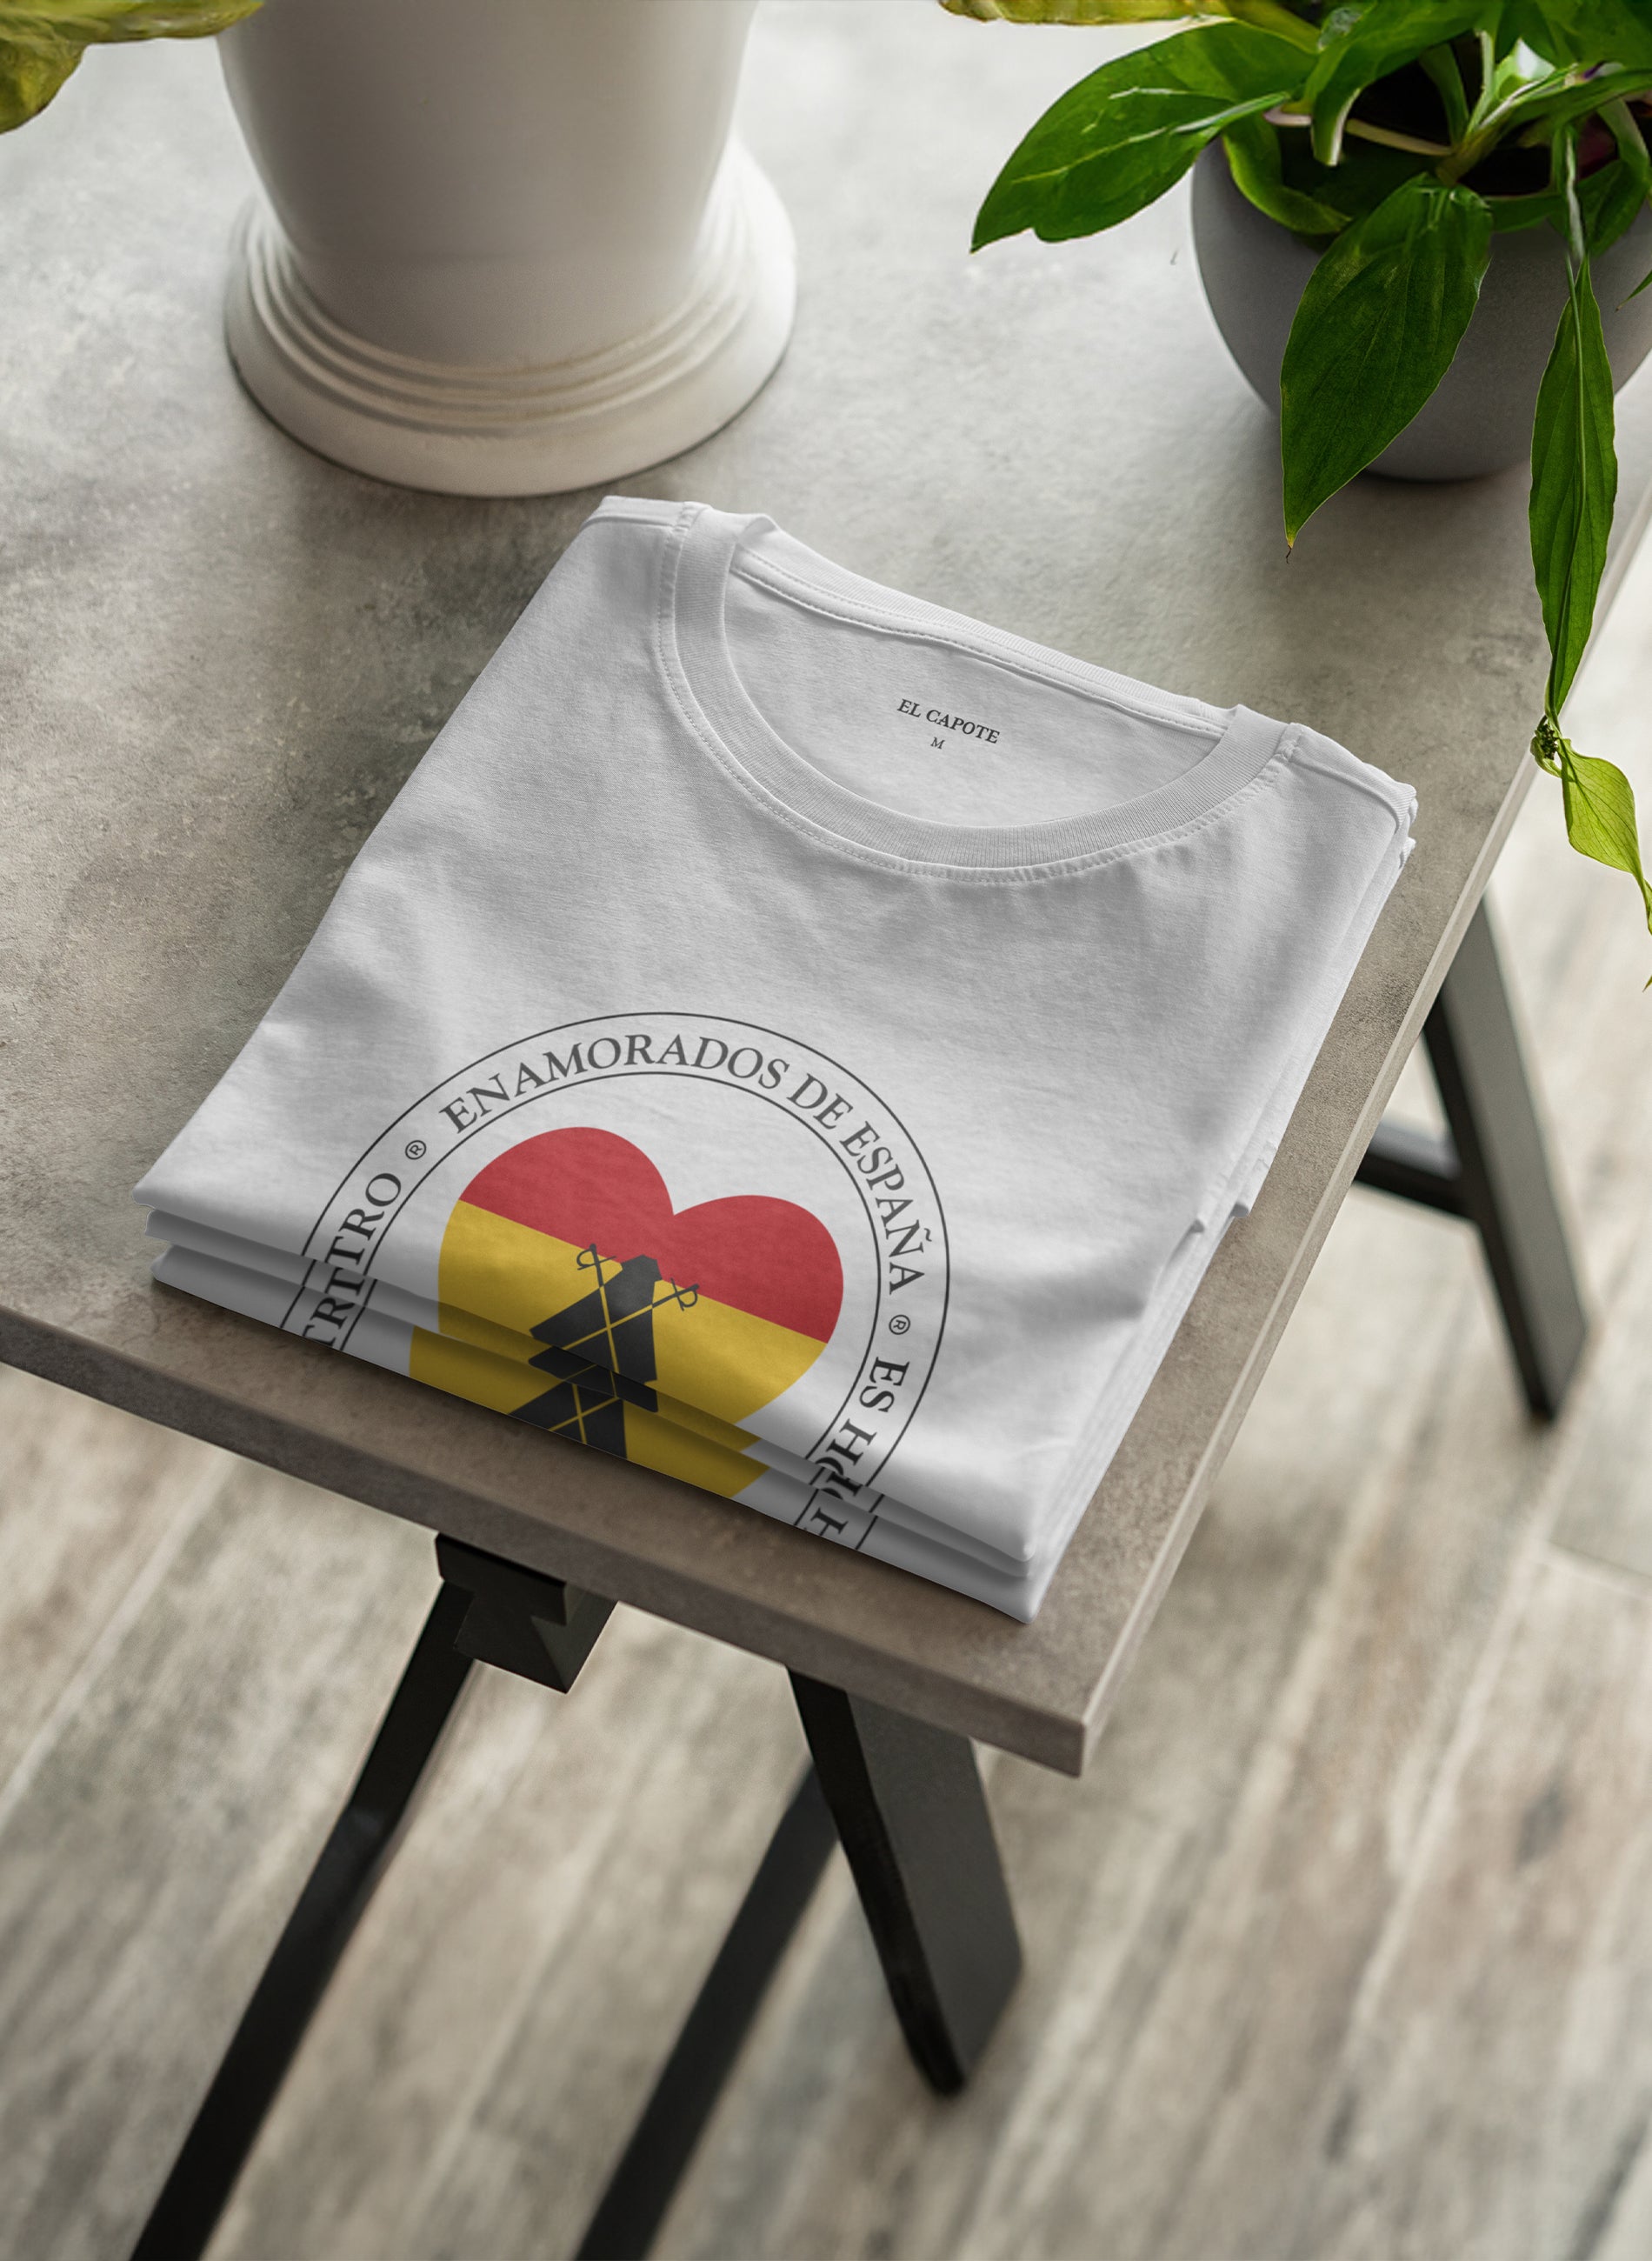 Camiseta Enamorados de España